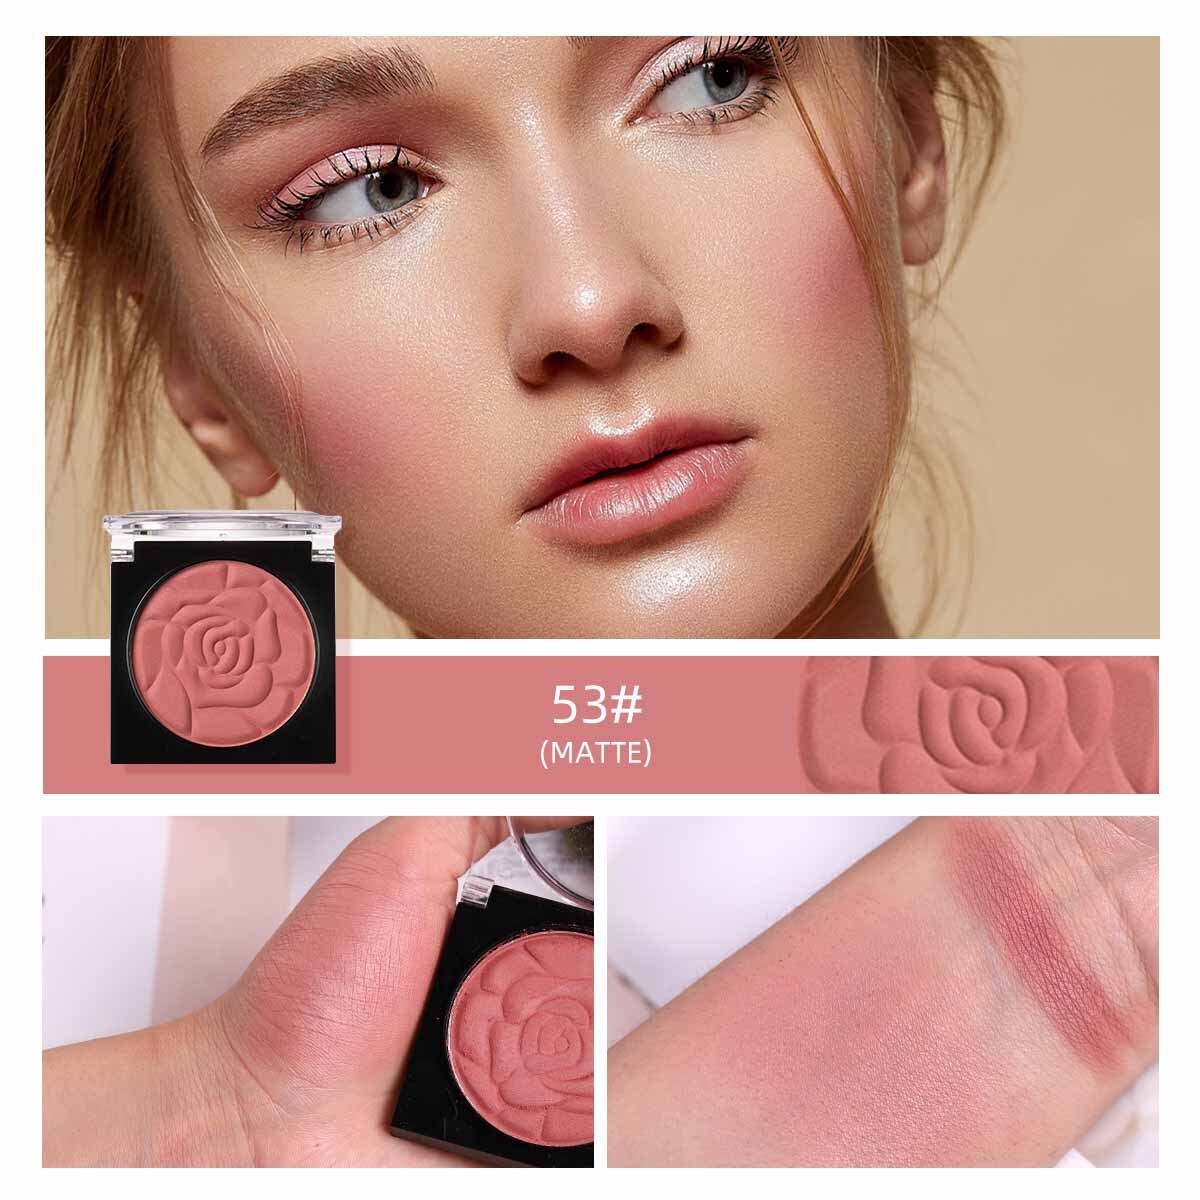 MENOW B705 10-Color Petal Blush Monochrome Blush Rouge Natural Durable Concealer Matte Pearlescent Blush Makeup Cosmetic Gift